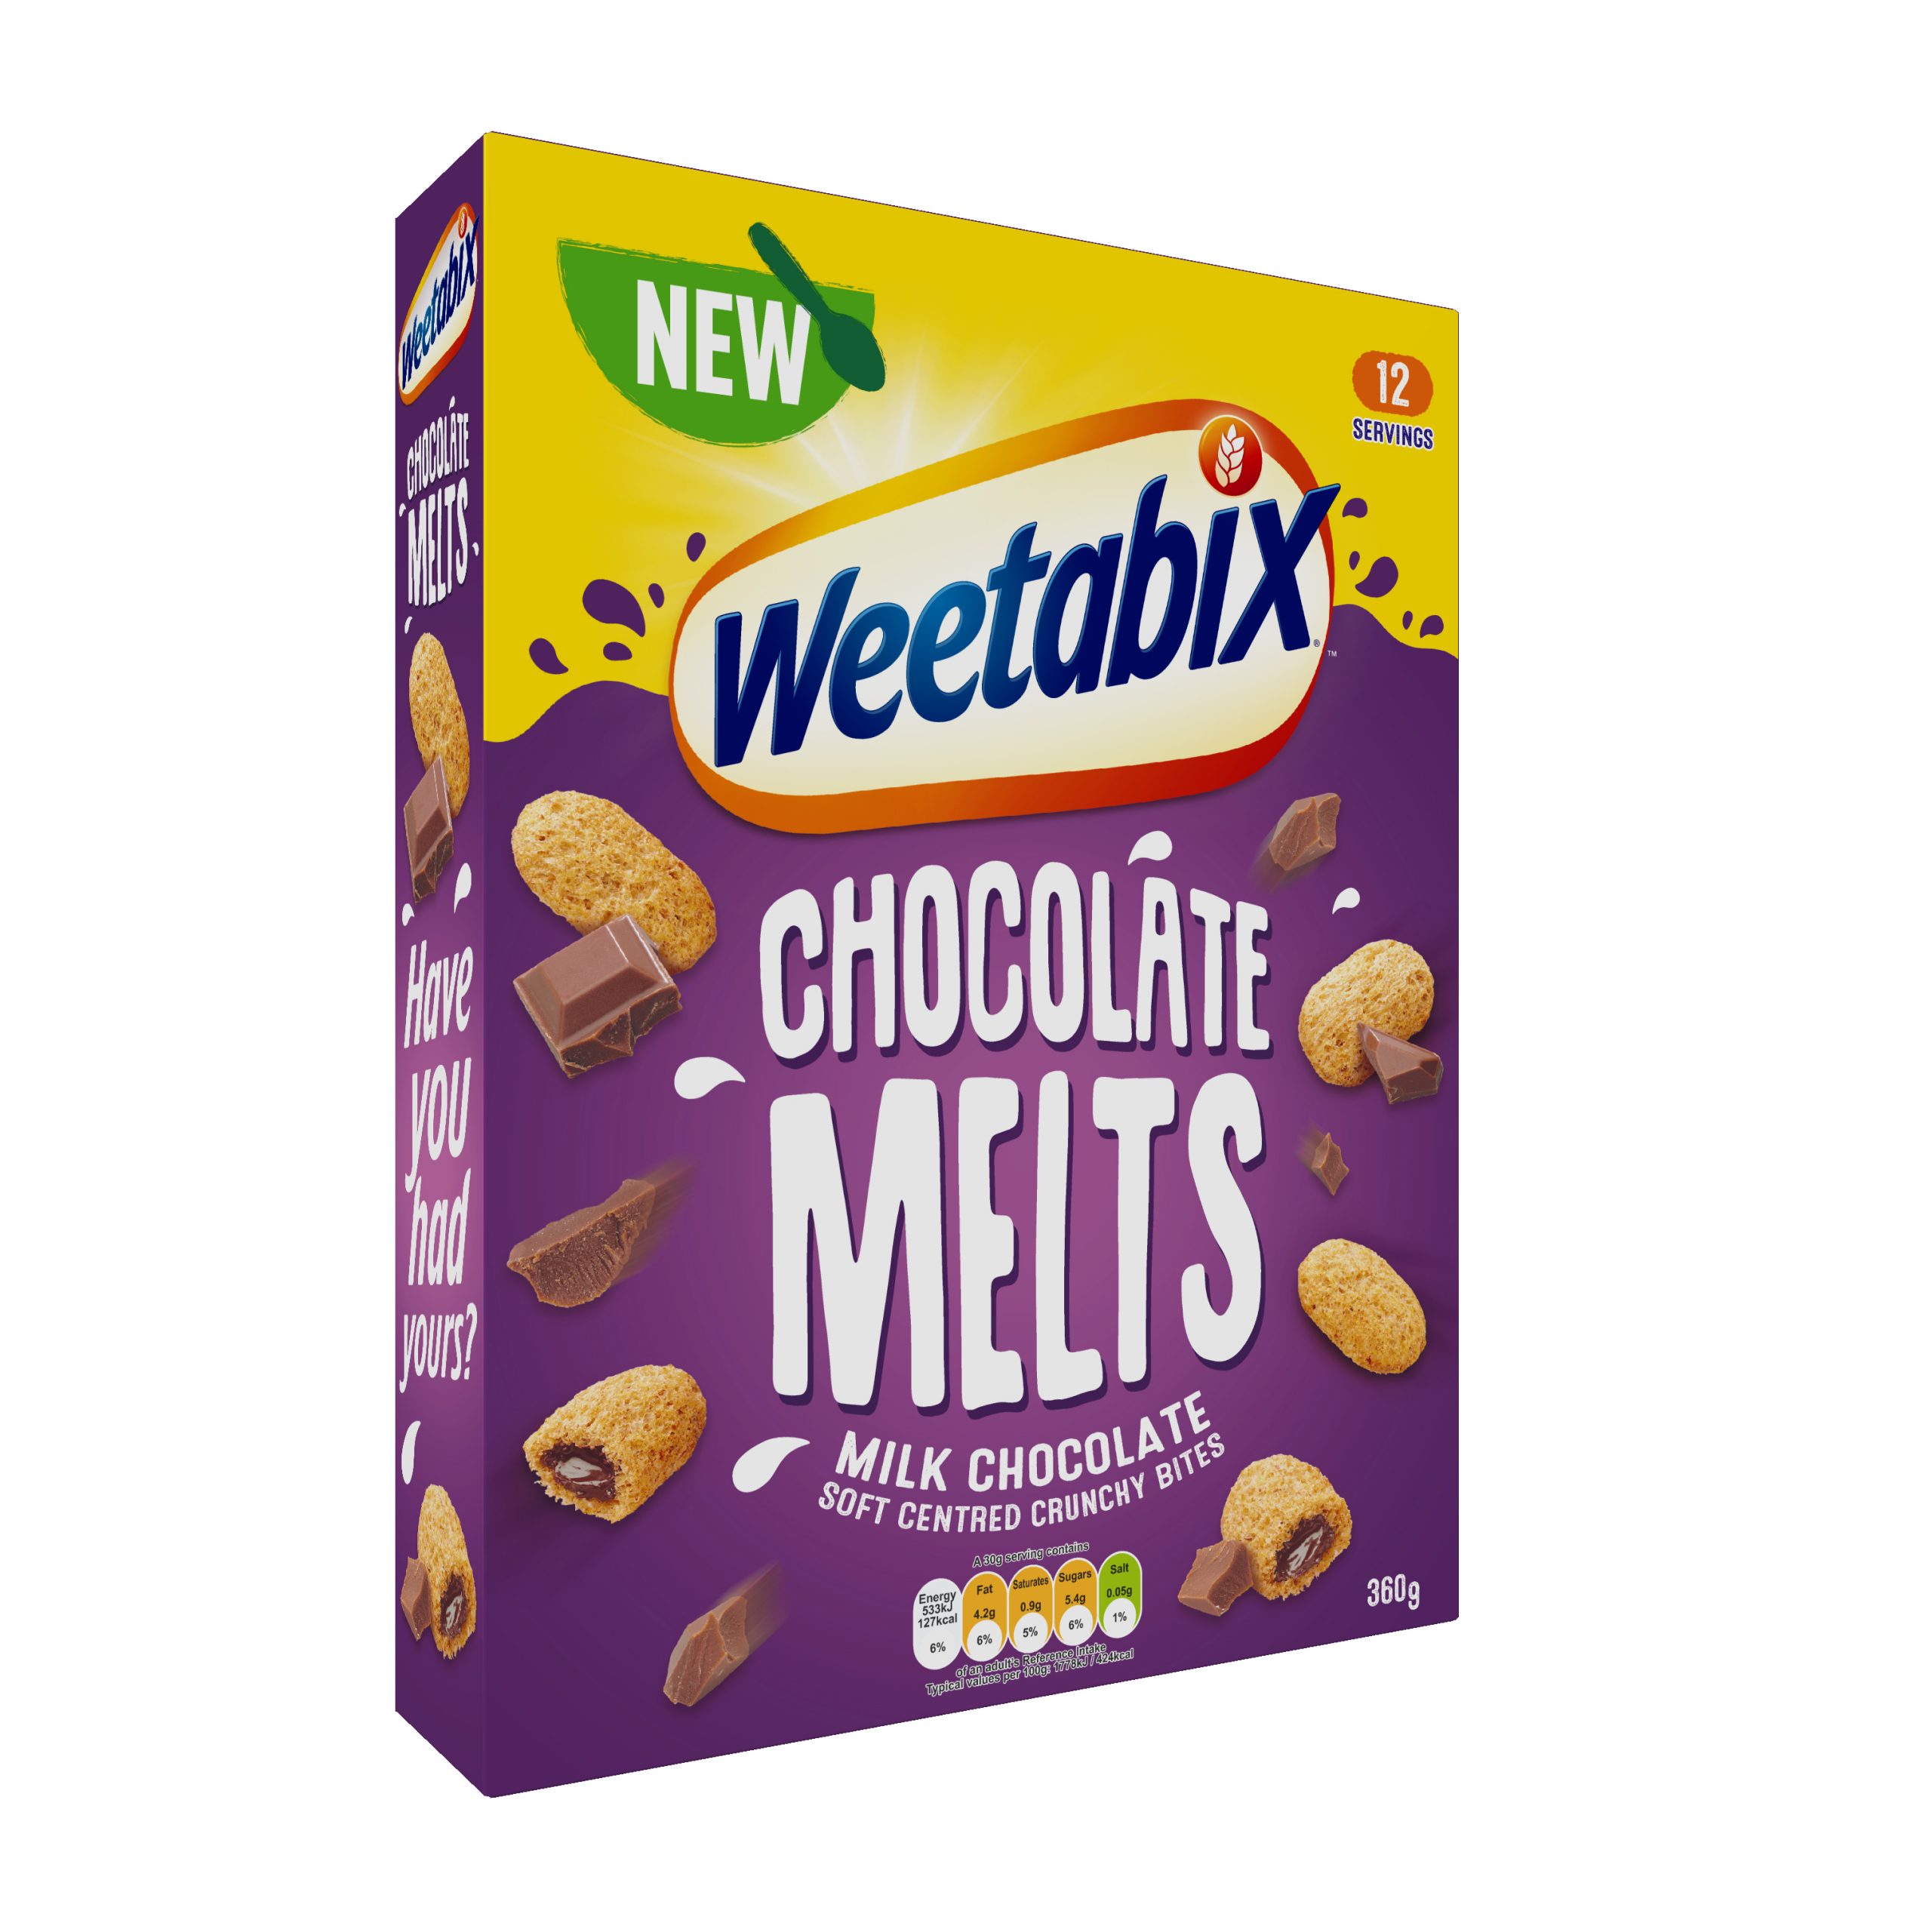 Weetabix Melts celebrates Product of the Year win